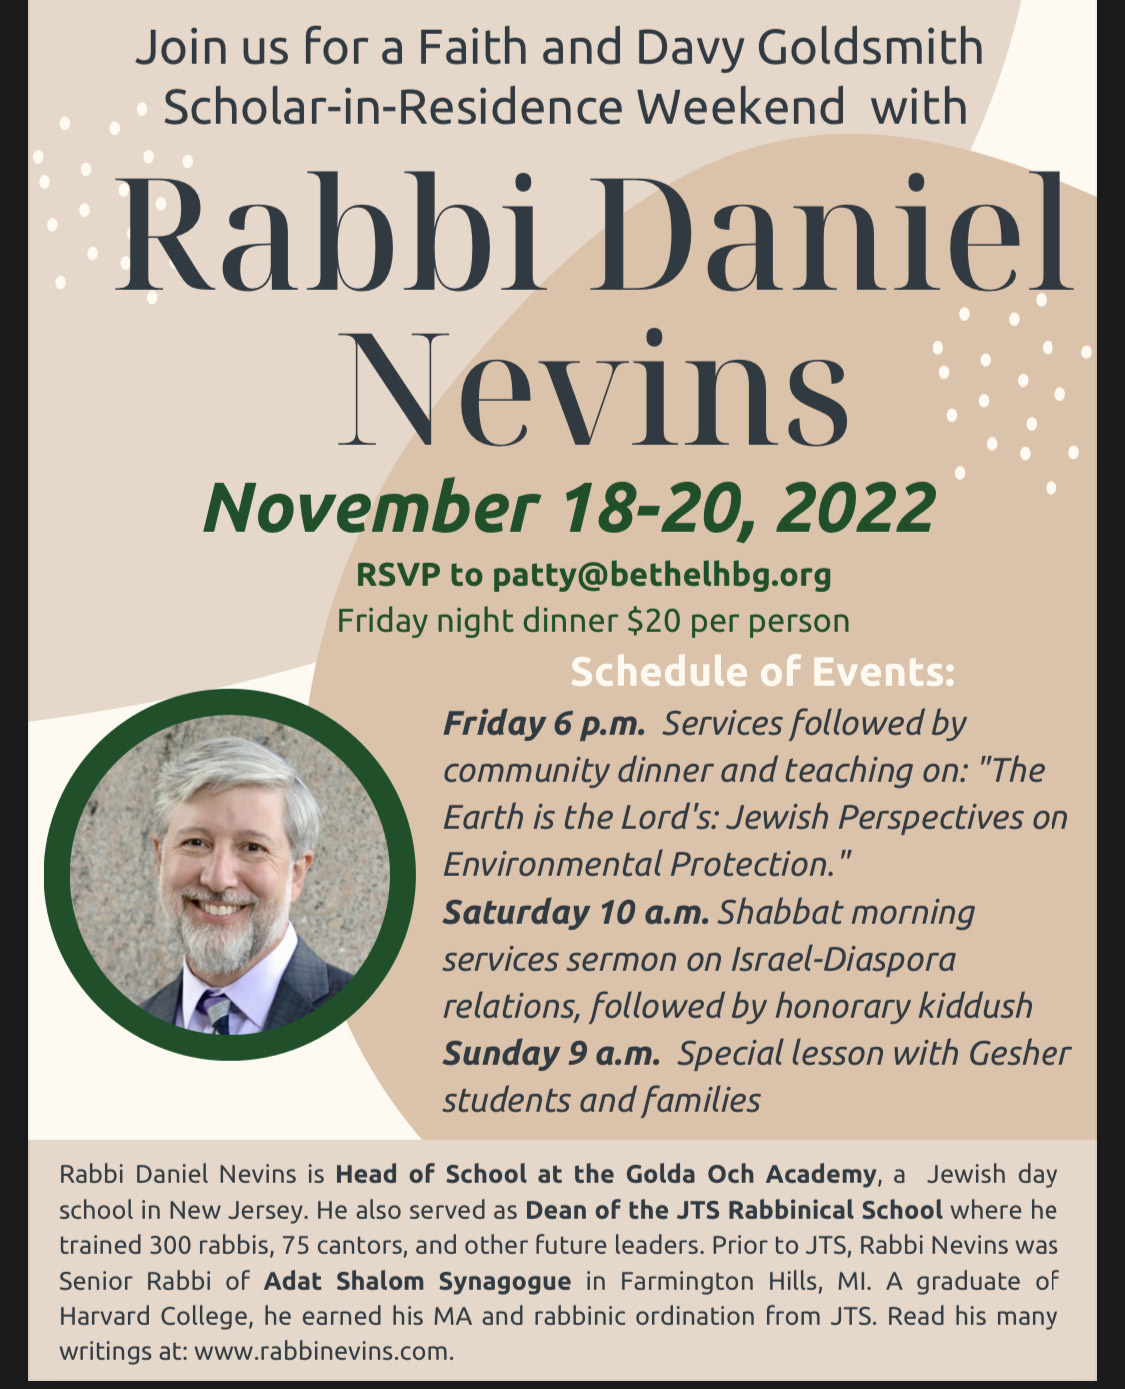 Scholar-in-Residence Weekend with Rabbi Daniel Nevins